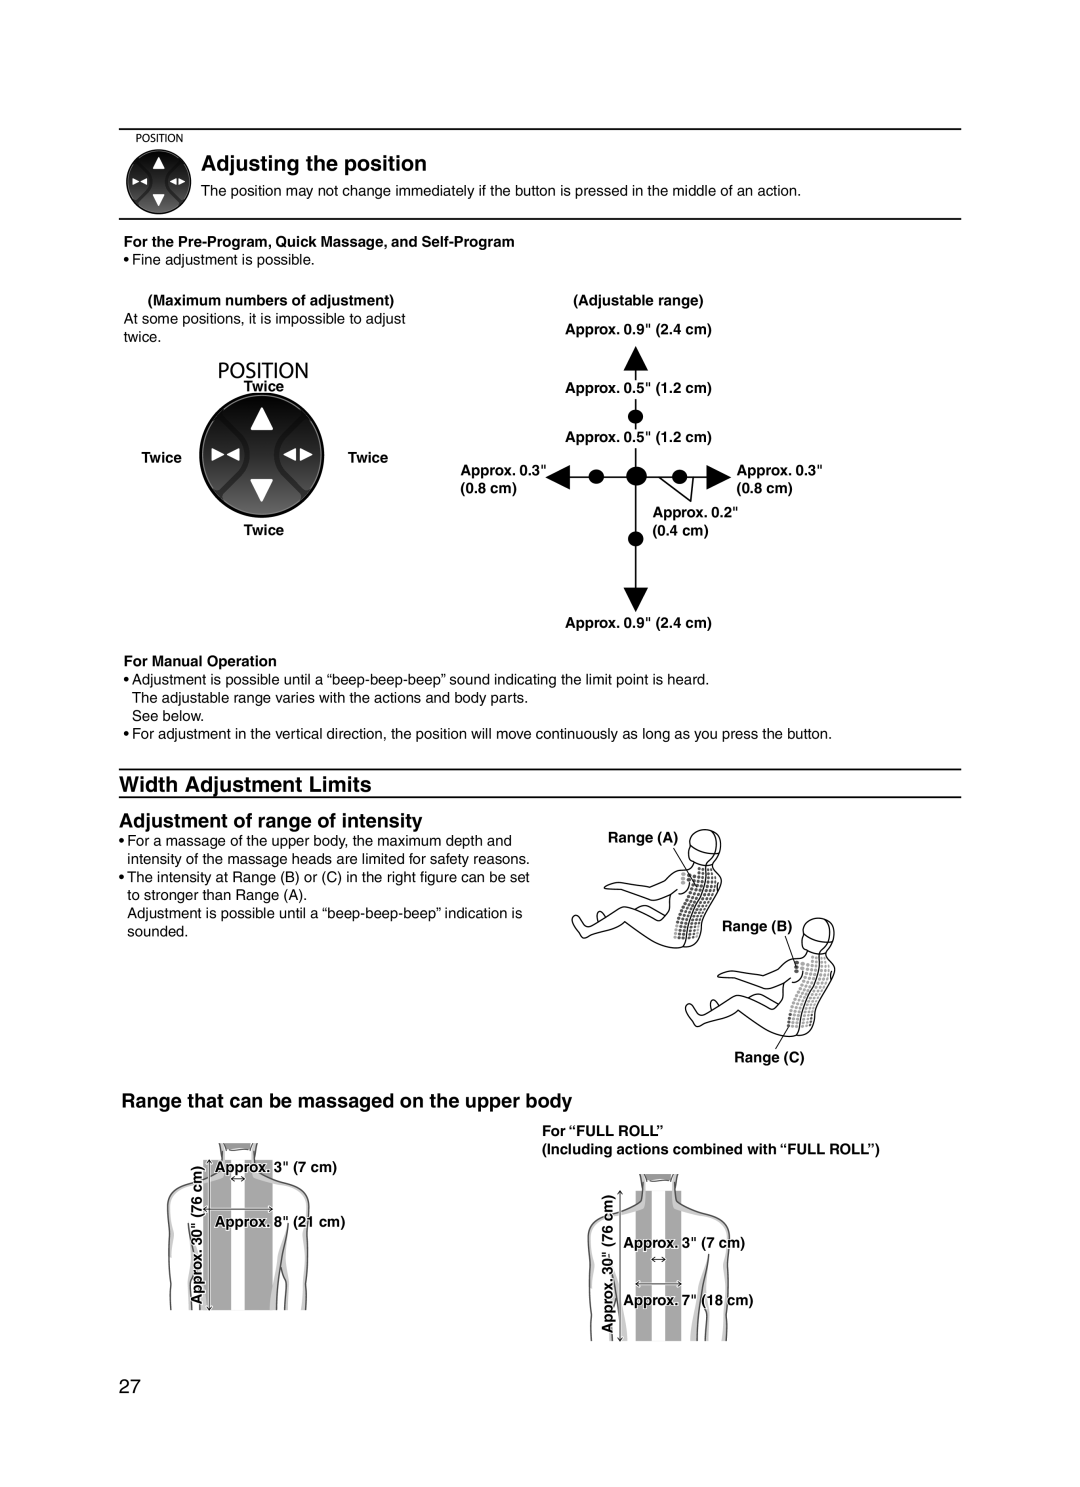 Panasonic 30003 manual Adjusting the position, Width Adjustment Limits, Adjustment of range of intensity 